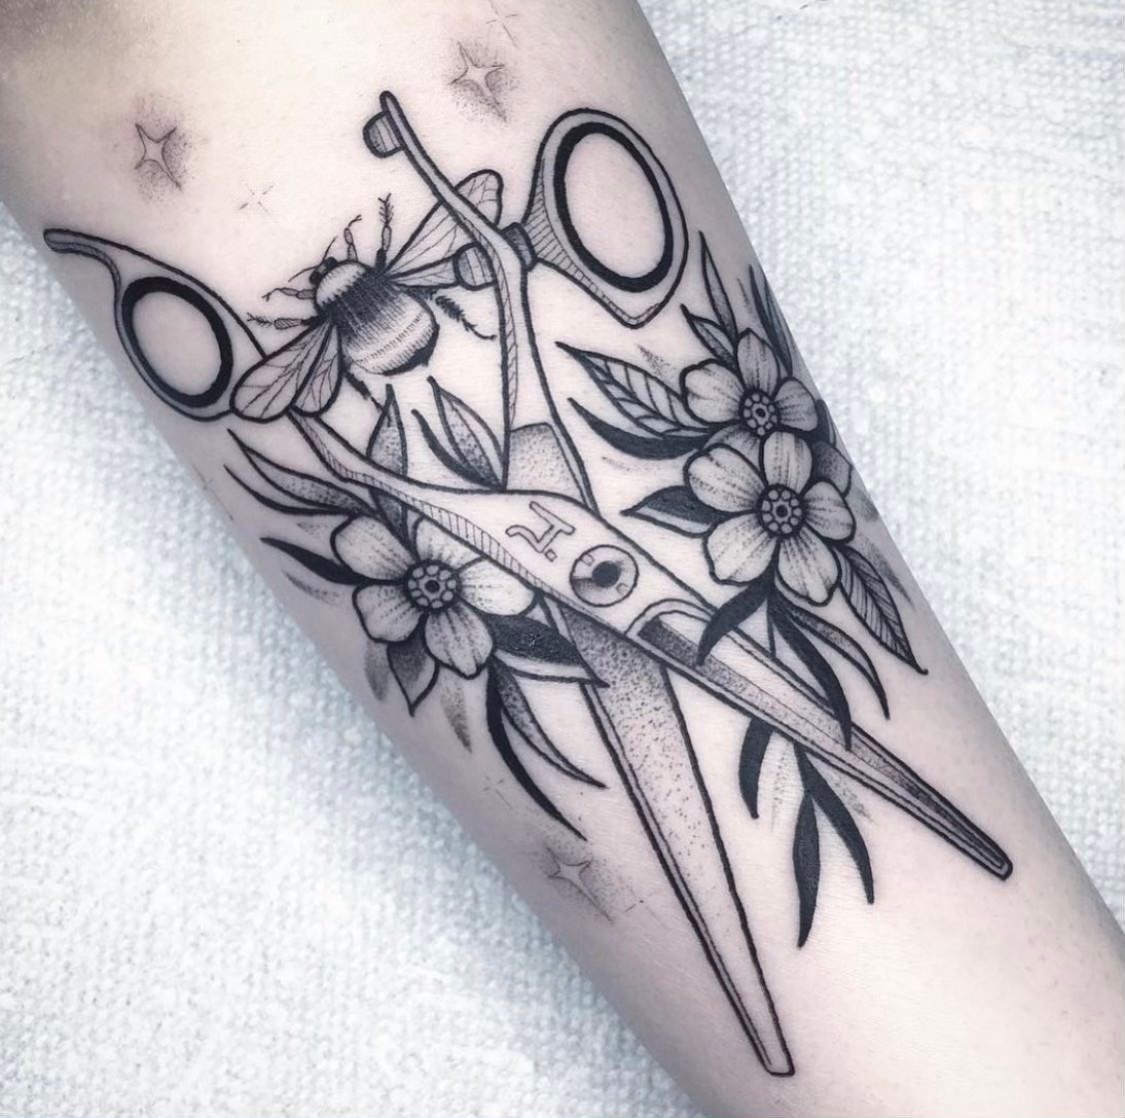 Tattoosday (A Tattoo Blog): Allison's Tattoo Has Cutting Edge Style